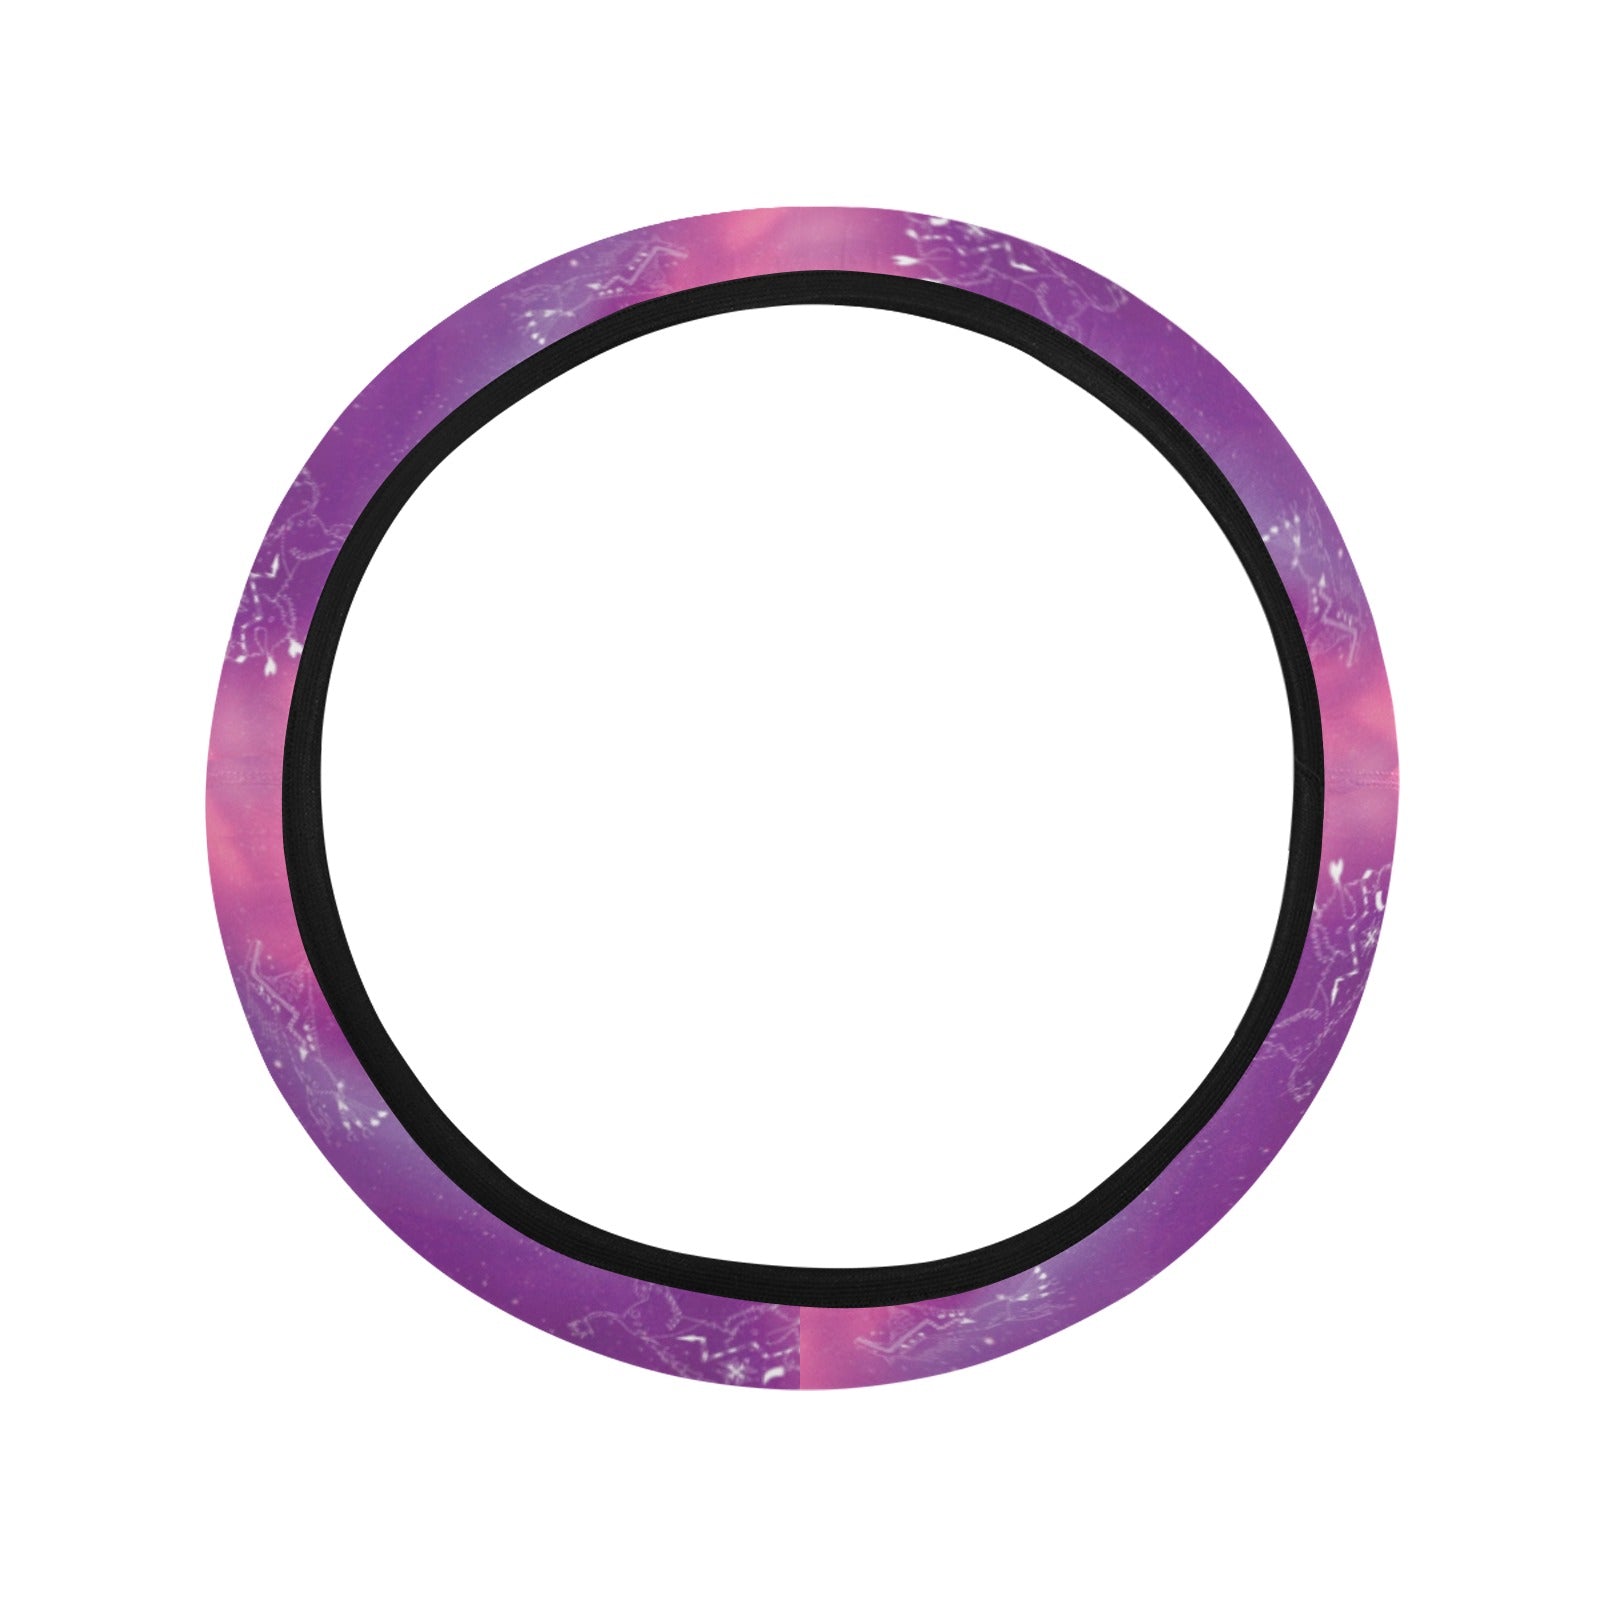 Animal Ancestors 7 Aurora Gases Pink and Purple Steering Wheel Cover with Elastic Edge